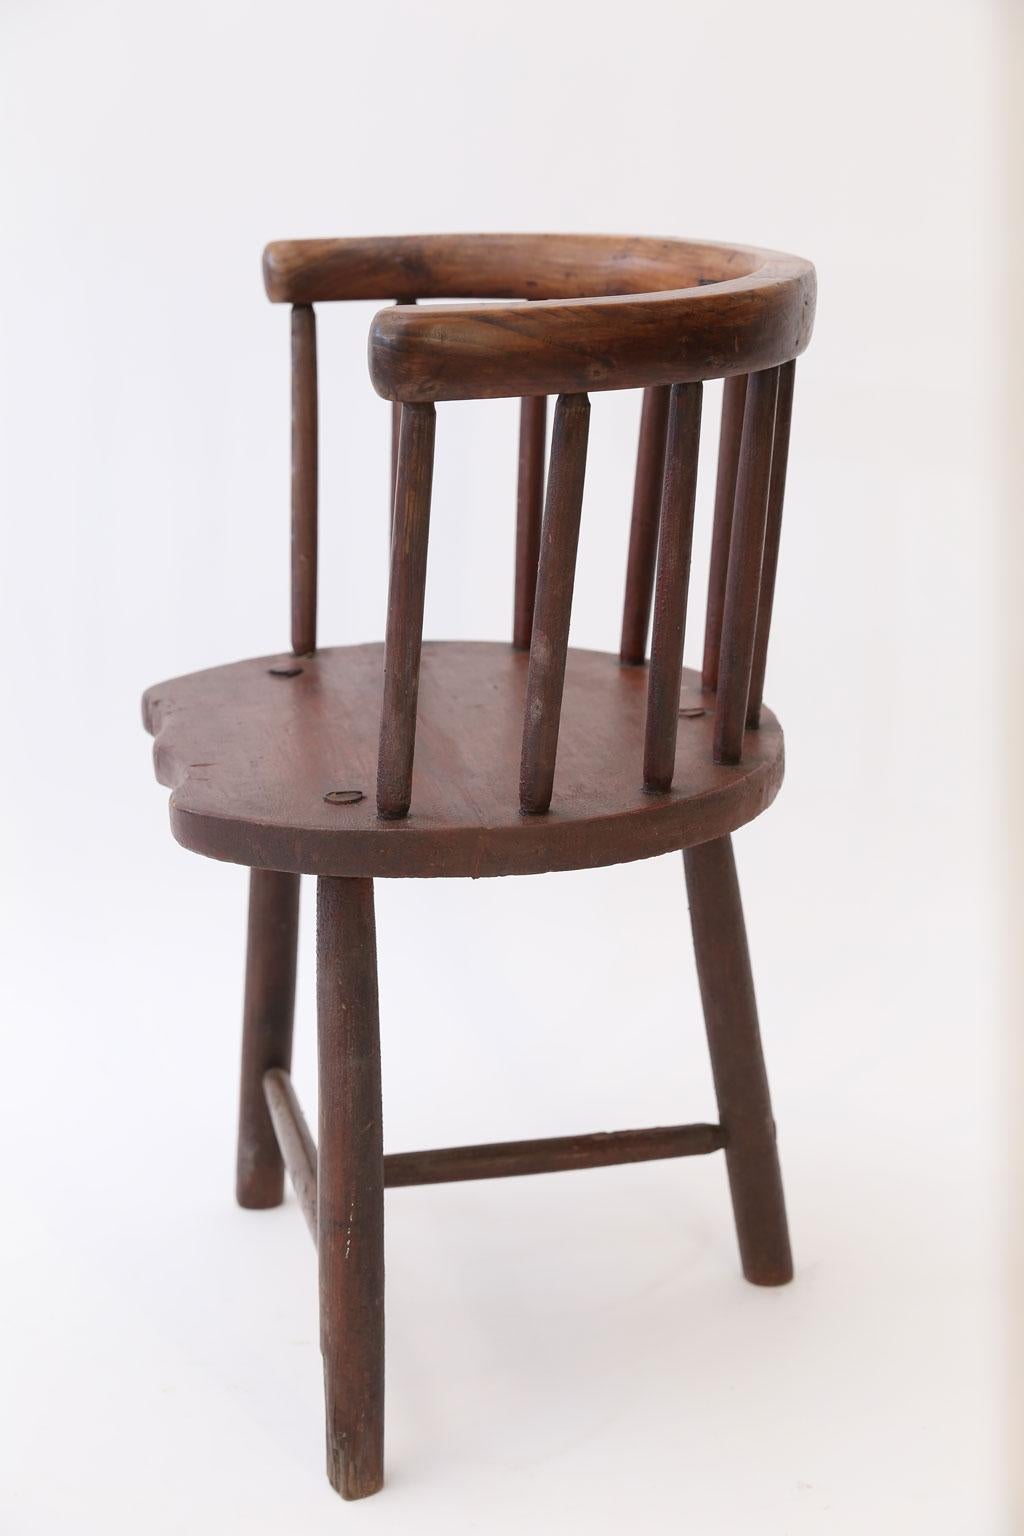 Turned Scottish Horseshoe Back Chair For Sale